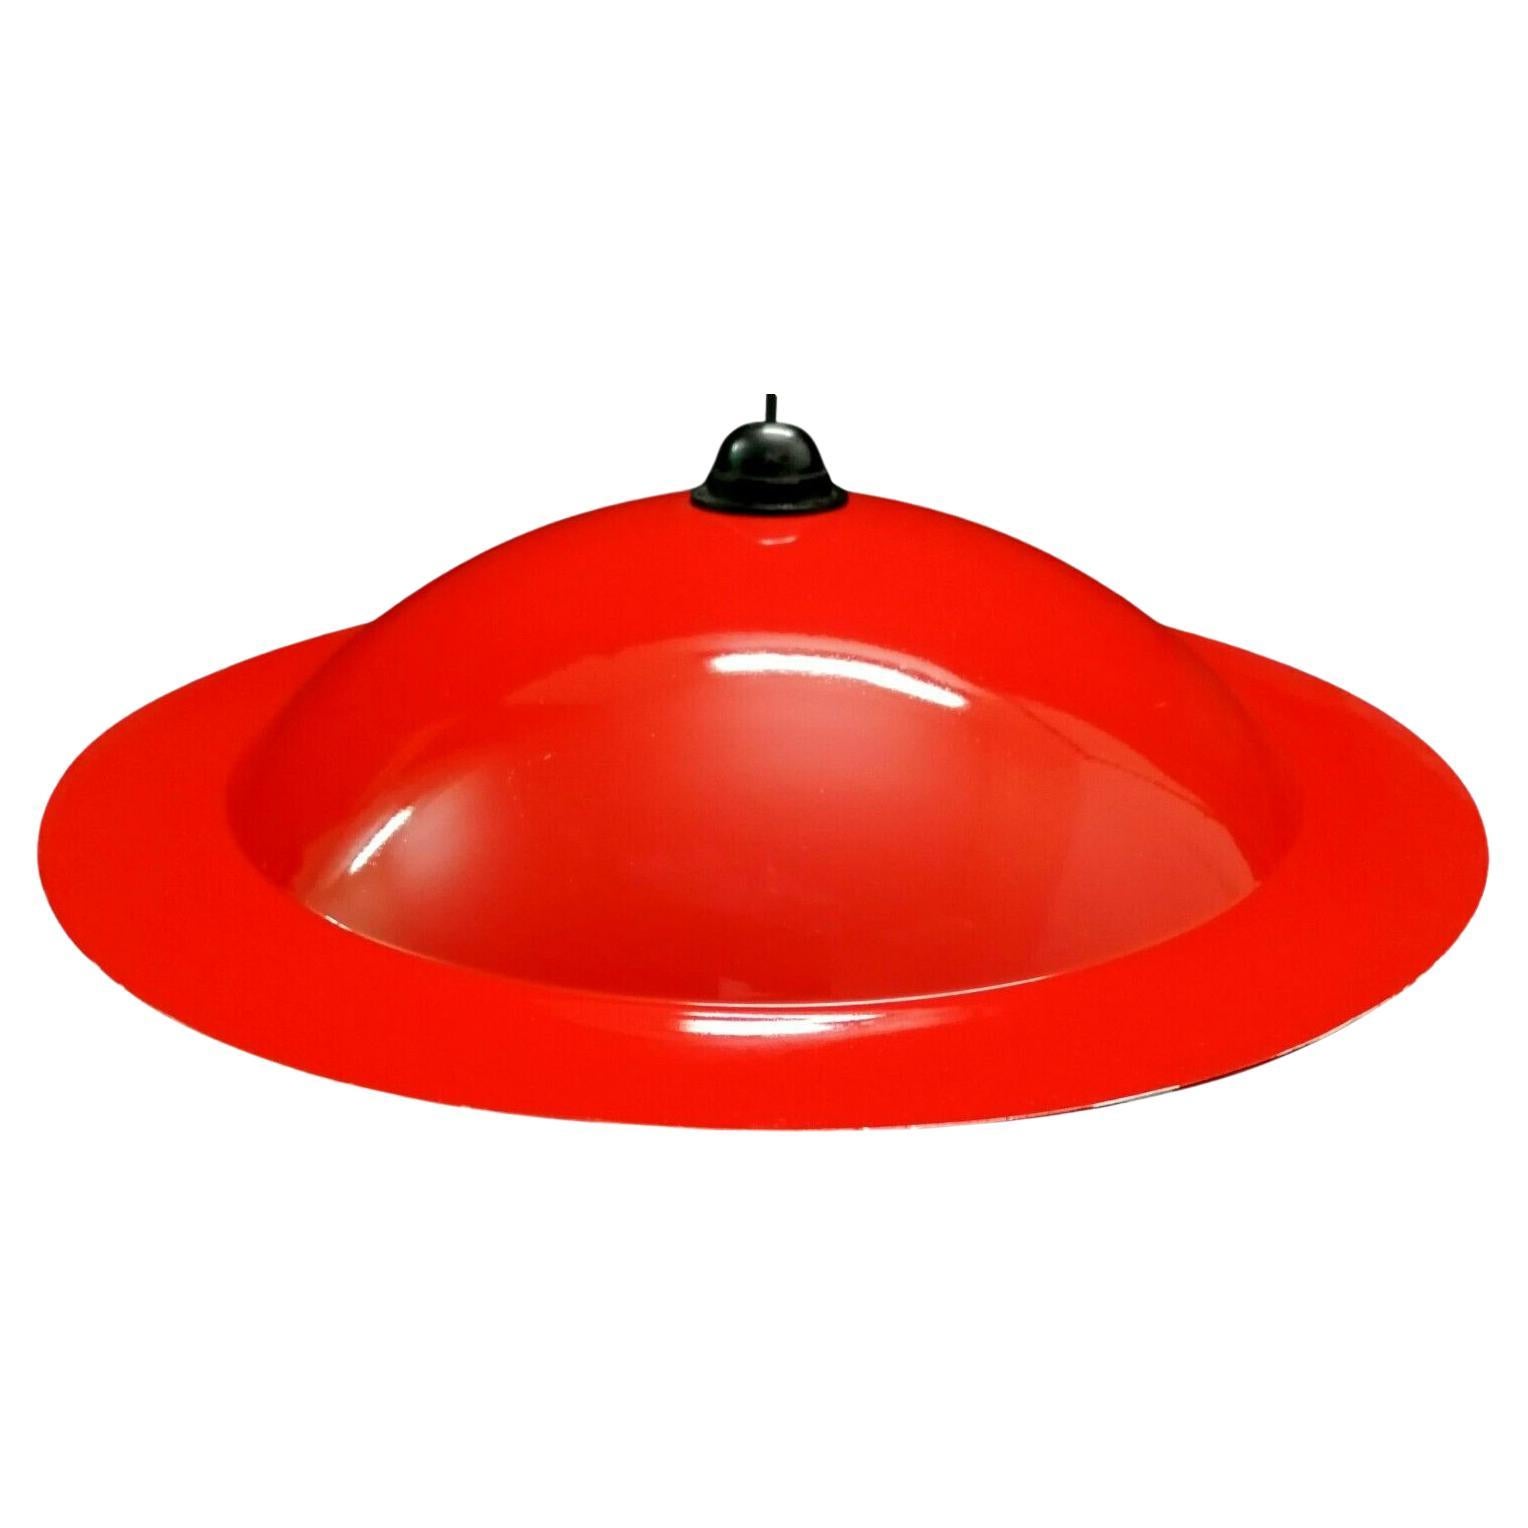 Suspension Lamp "Lampiatta" Design De Pas D'urbino Lomazzi for Stilnovo, 1971